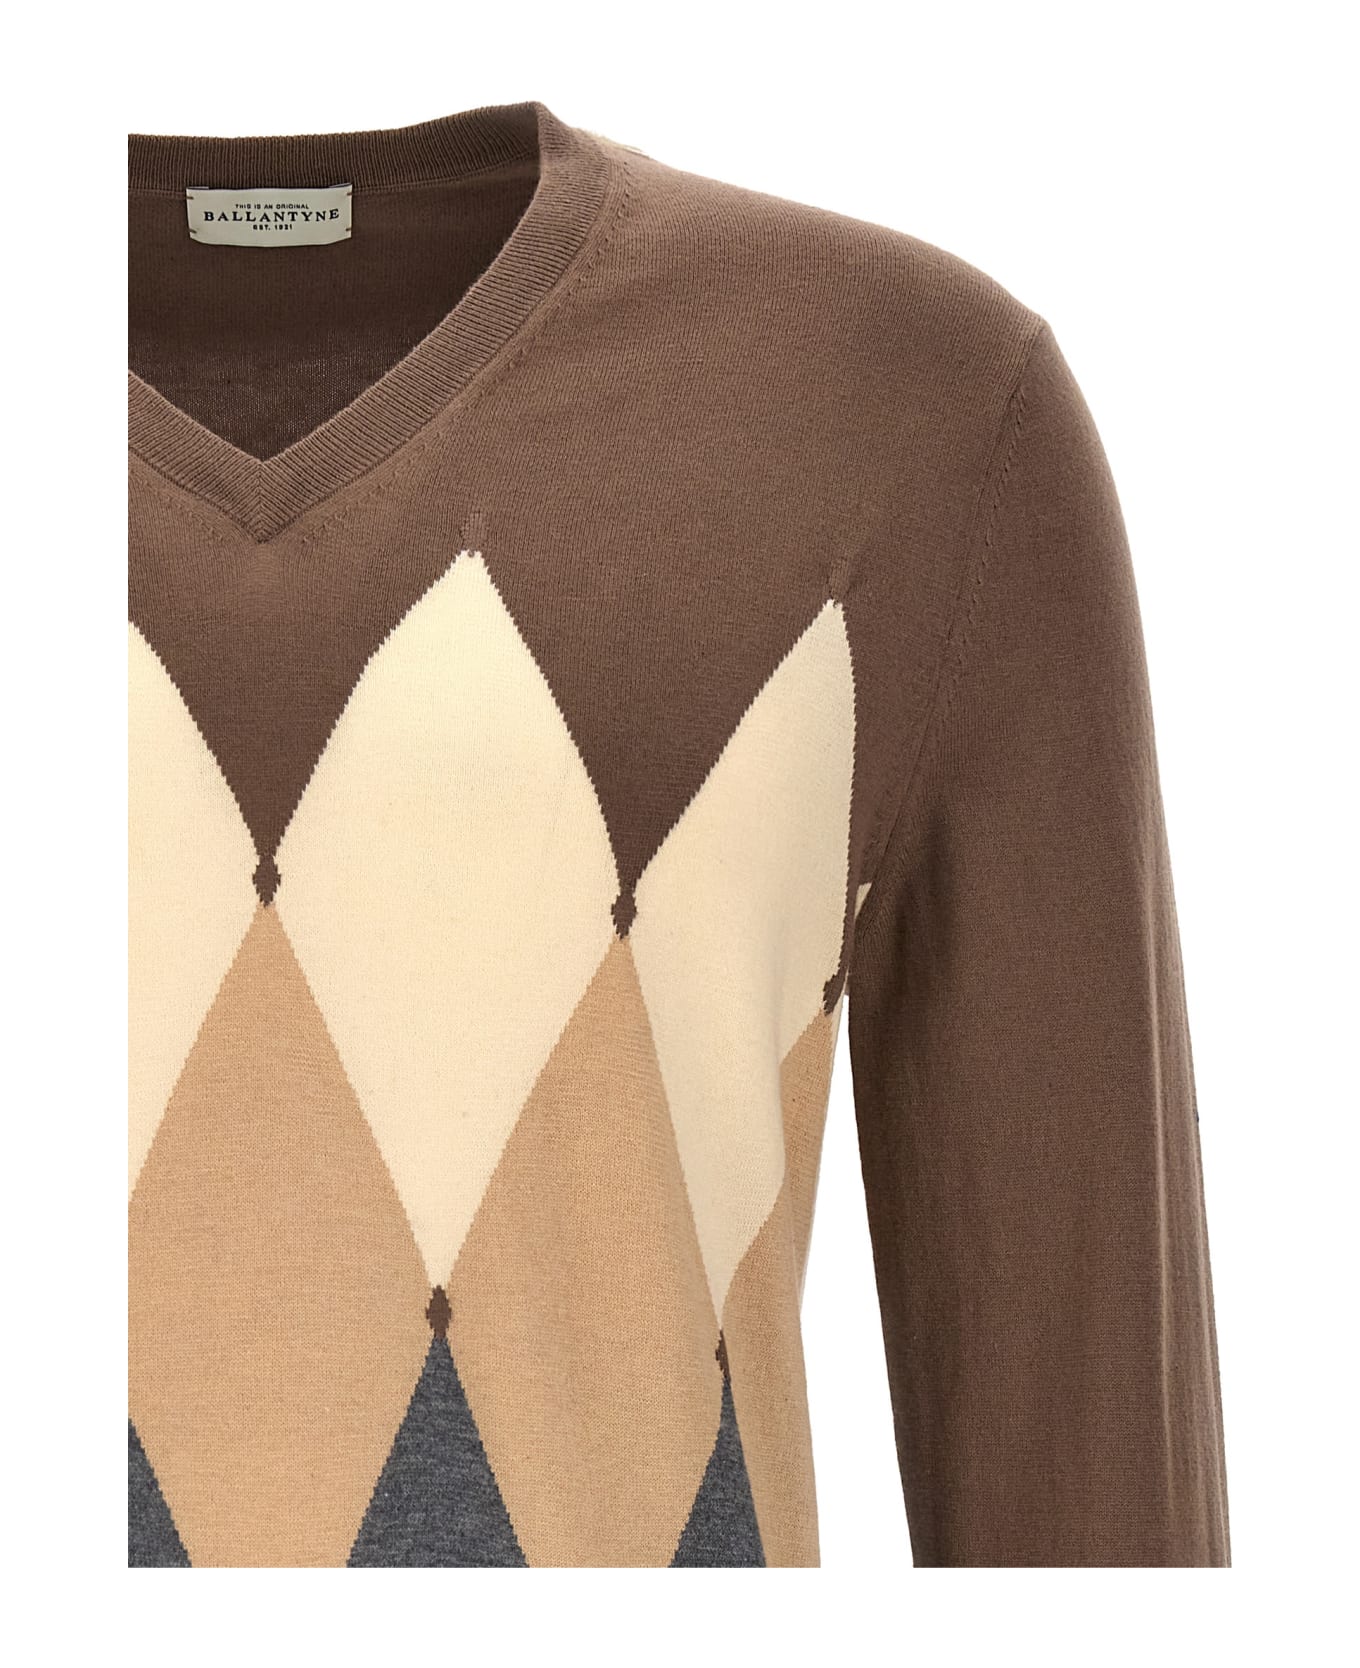 Ballantyne 'argyle' Sweater - Beige